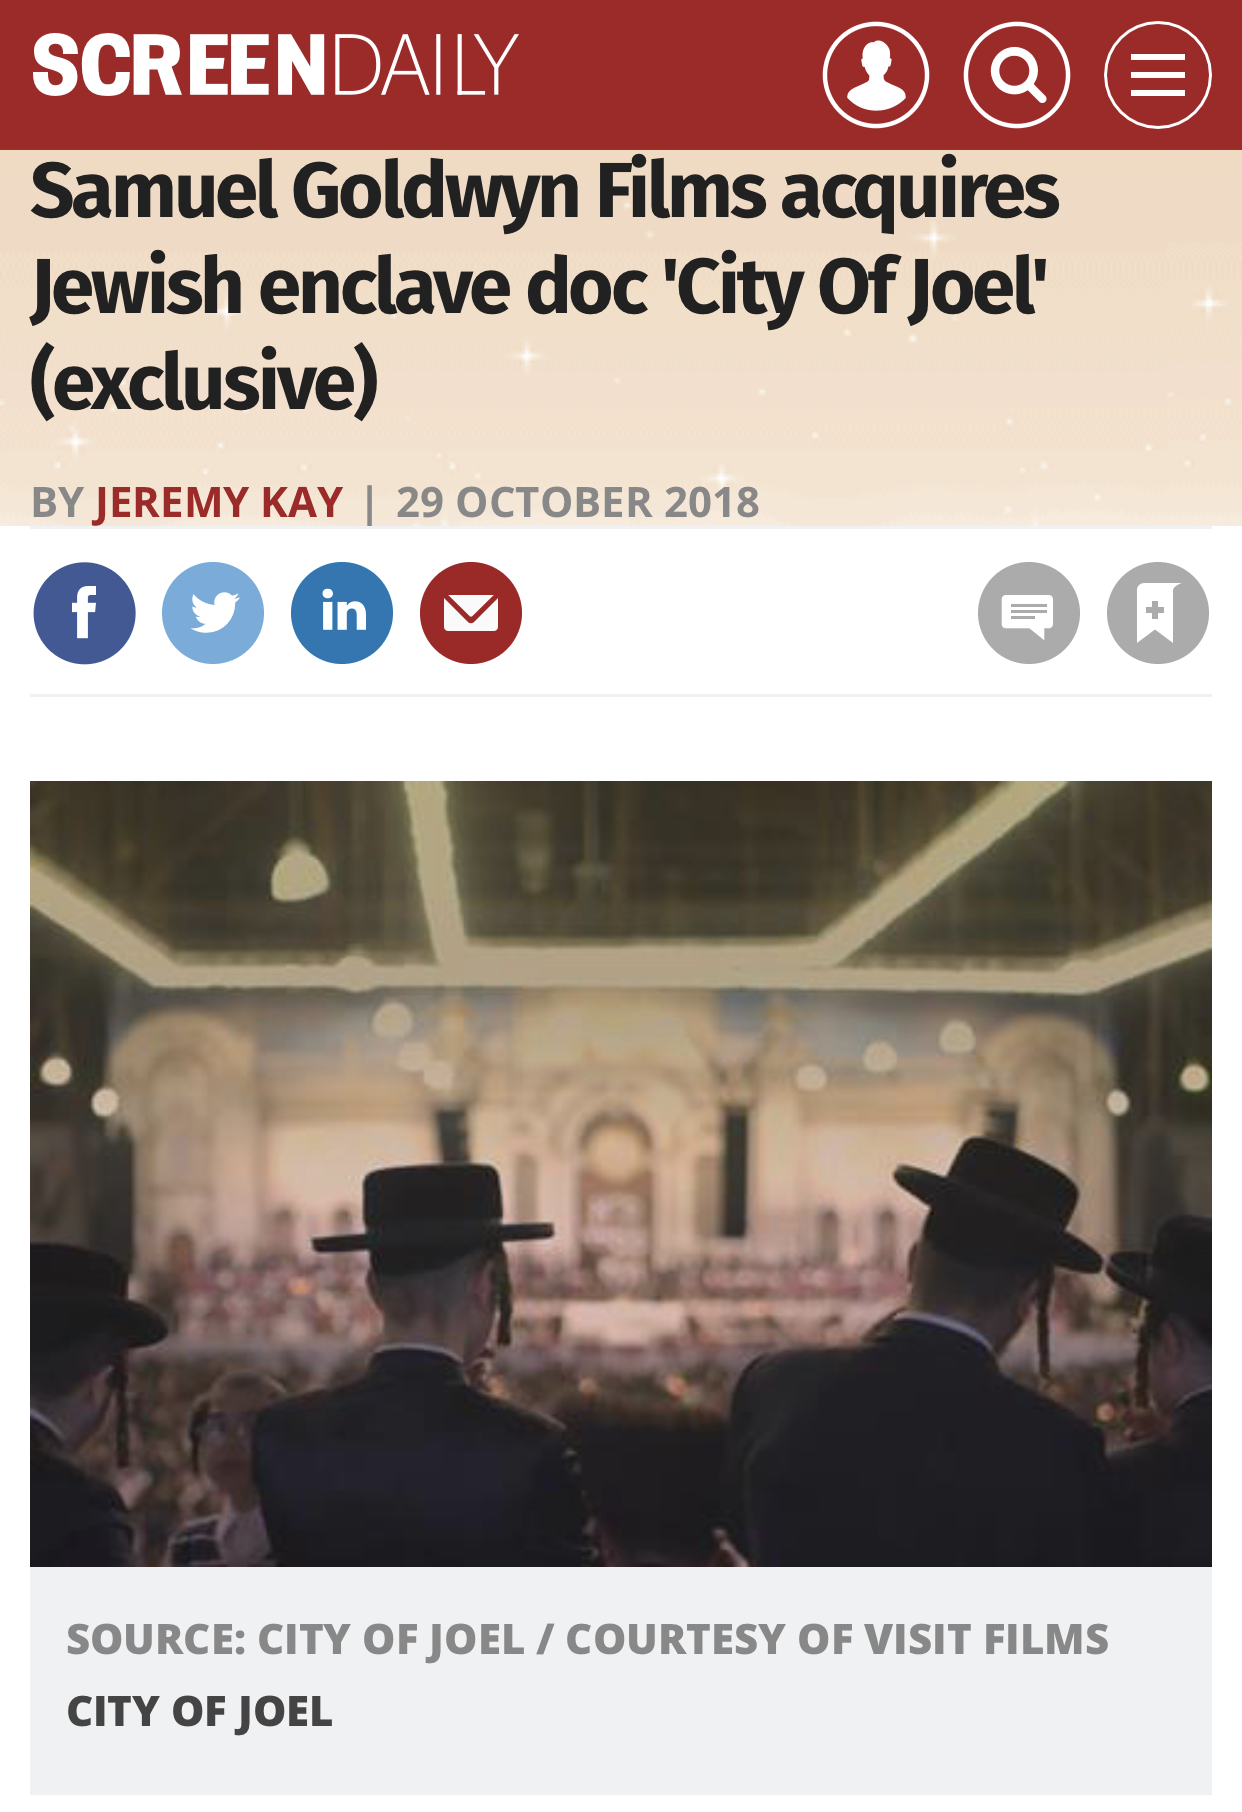 Samuel Goldwyn Films acquires Jewish enclave doc 'City Of Joel' (exclusive)